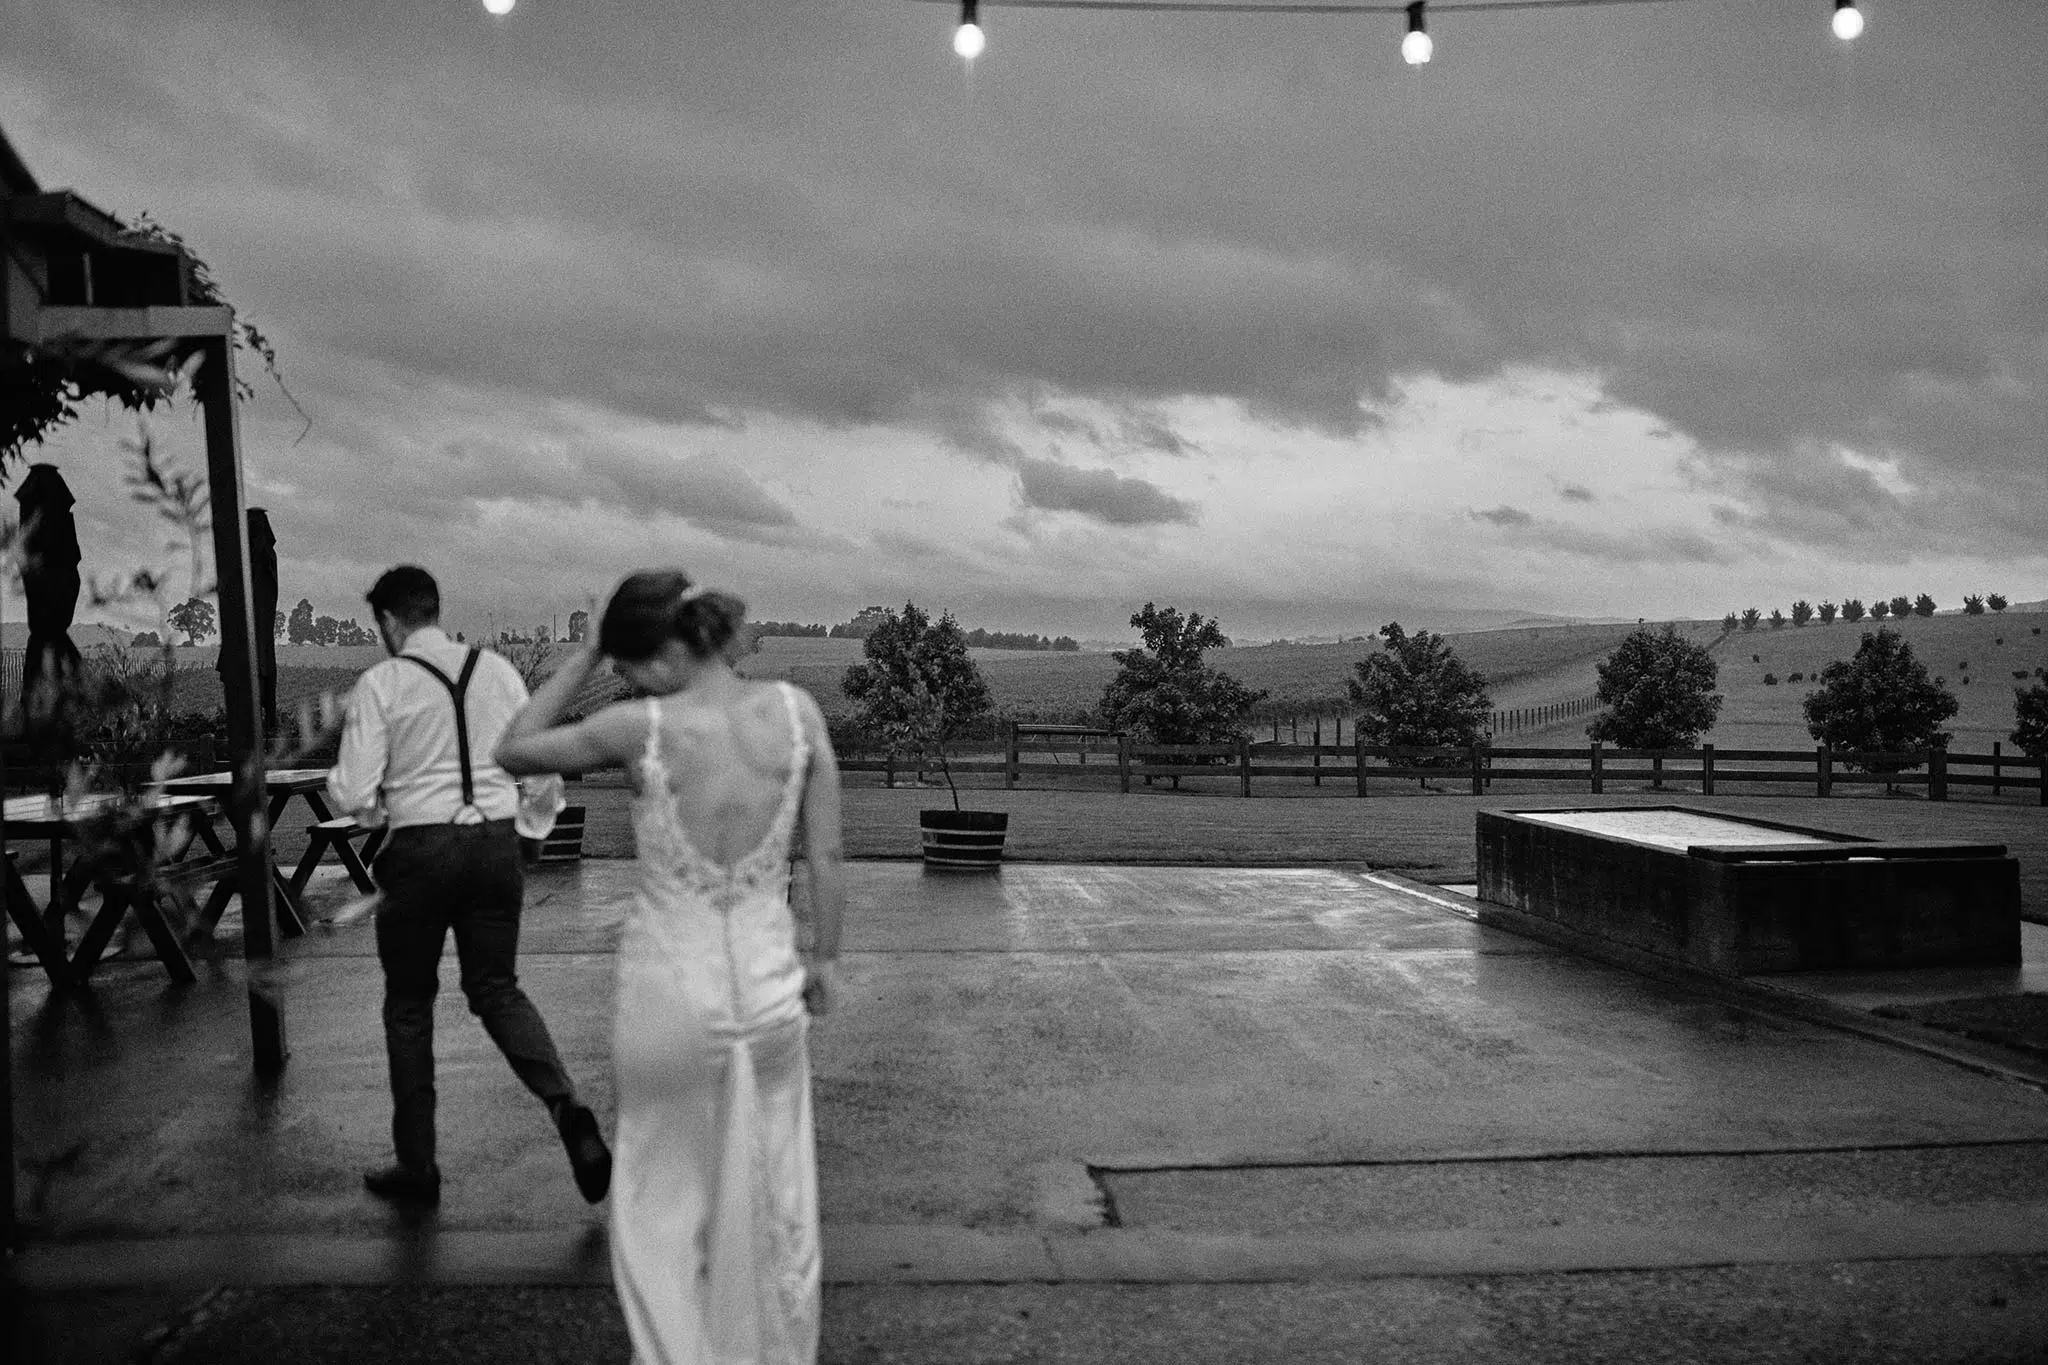 zonzo wedding photography reception entering reception